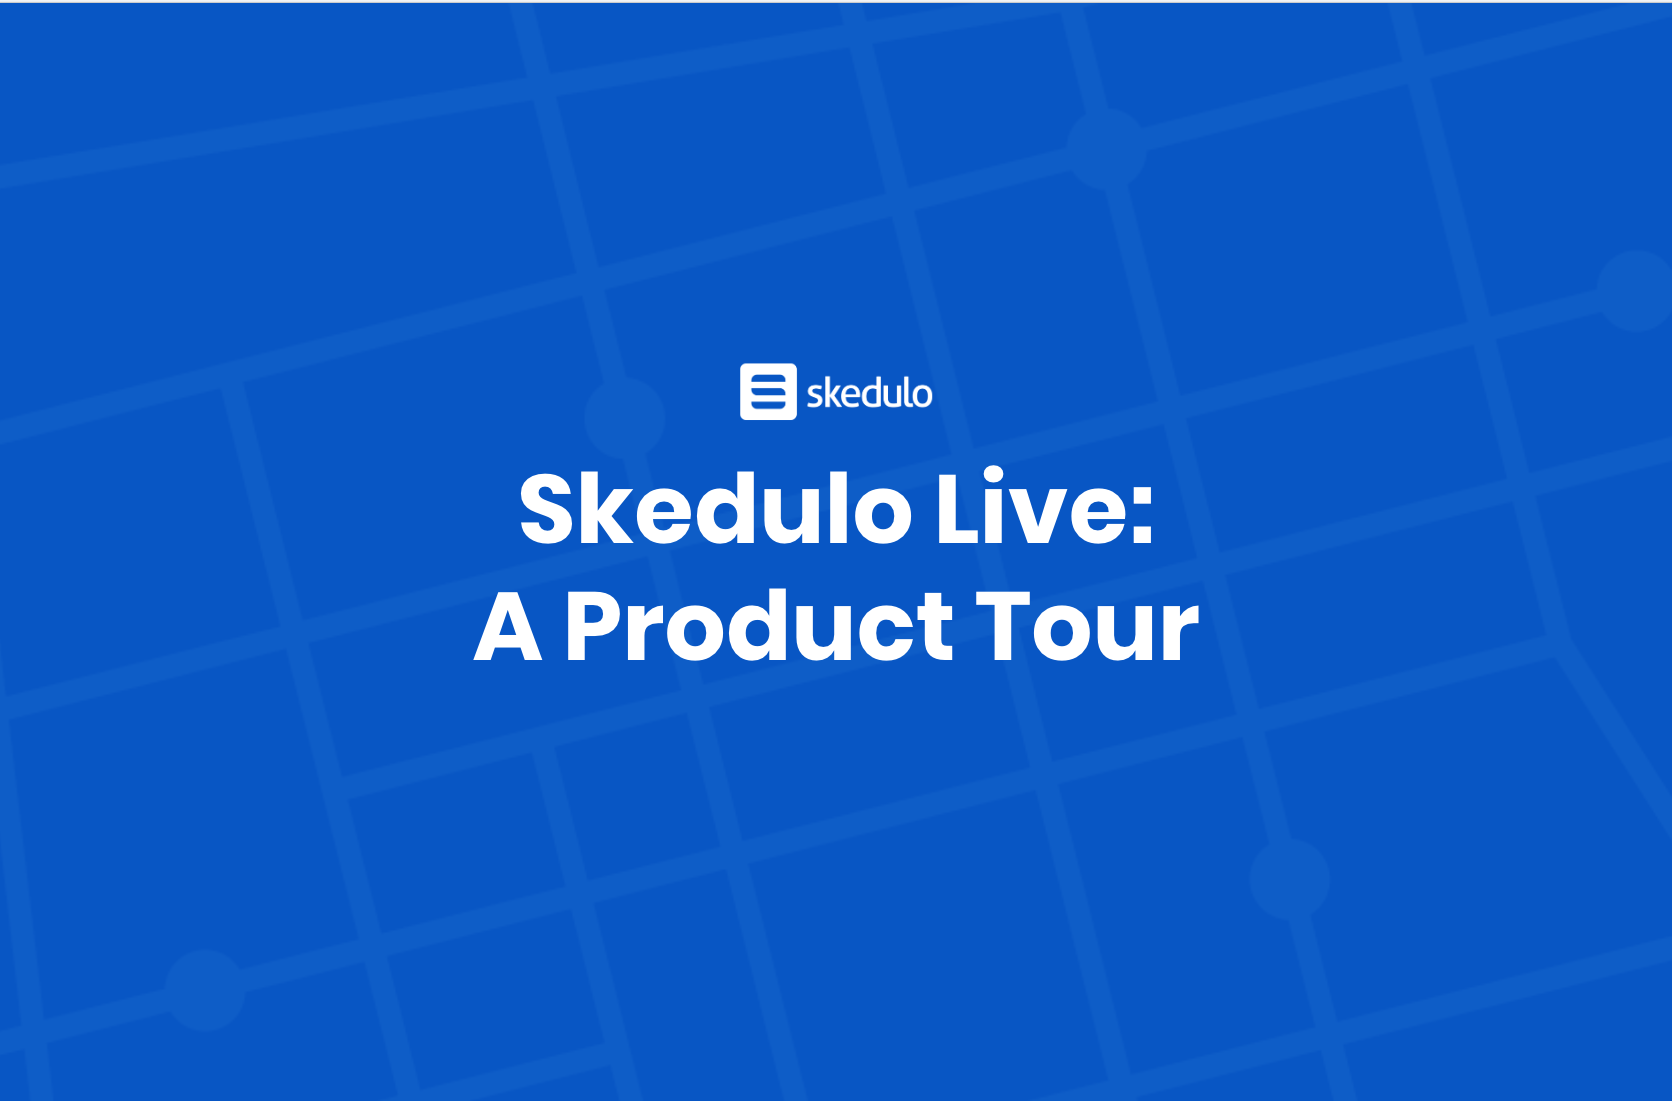 Skedulo Live: A Product Tour, Title Image